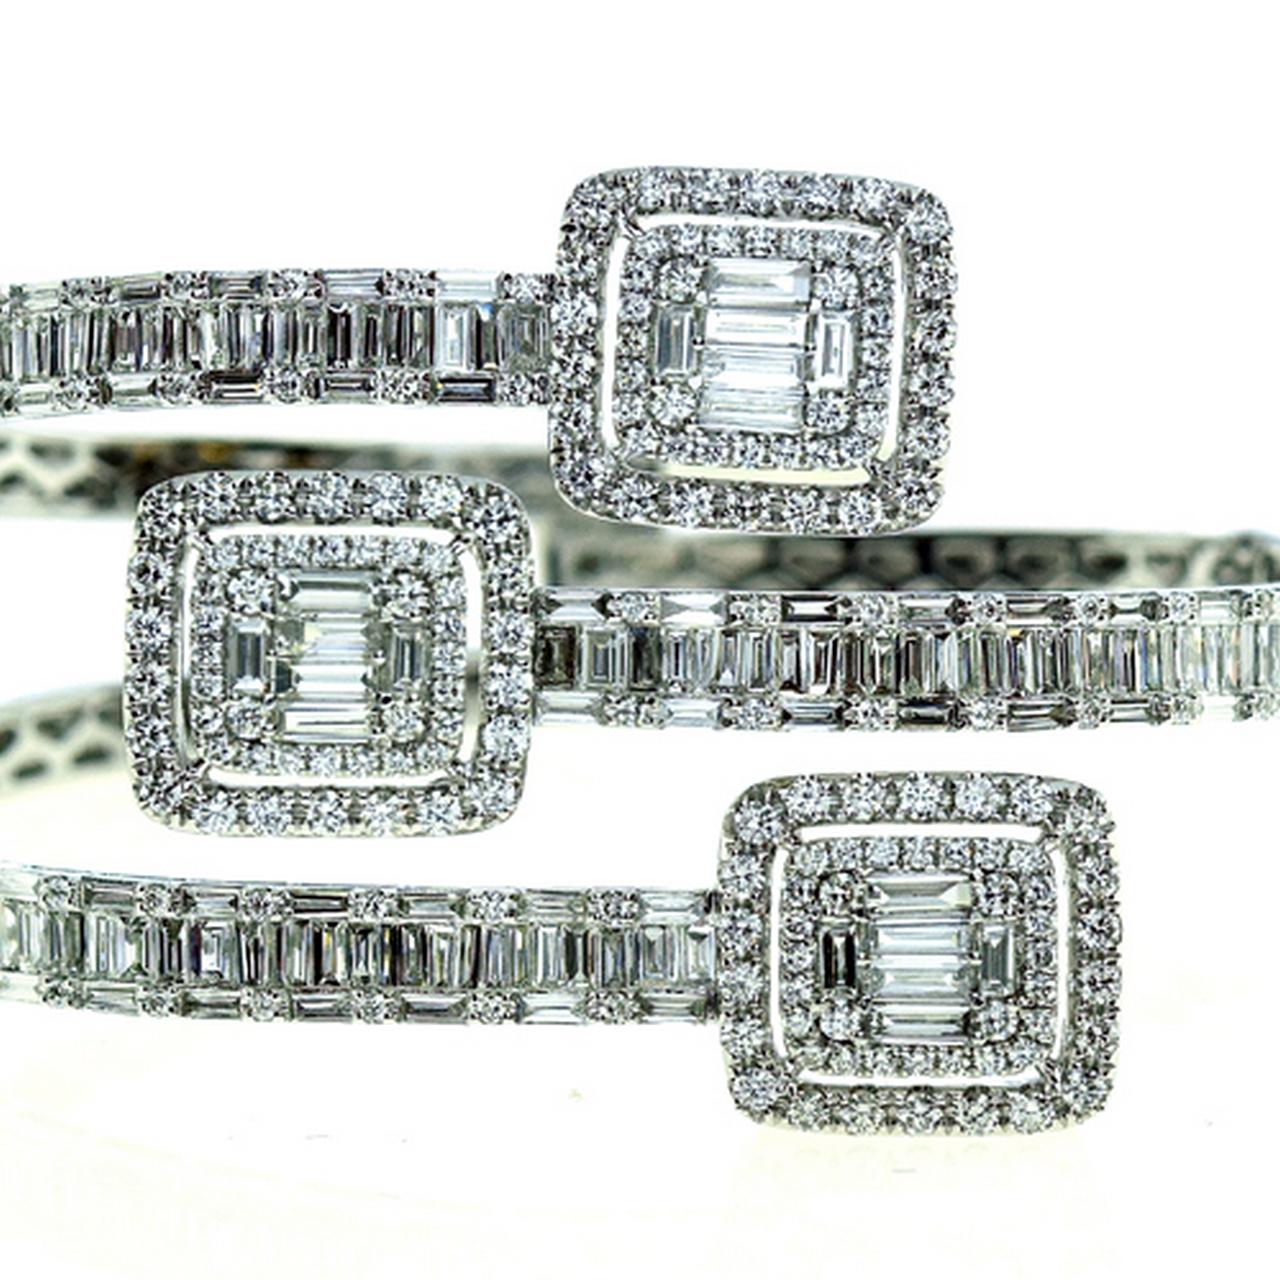 NEU $101 000 18KT Gold Fancy Glitzer glitzernde Diamant-Manschettenarmband-Armreif-Armreif-Manschettenknöpfe (Gemischter Schliff) im Angebot